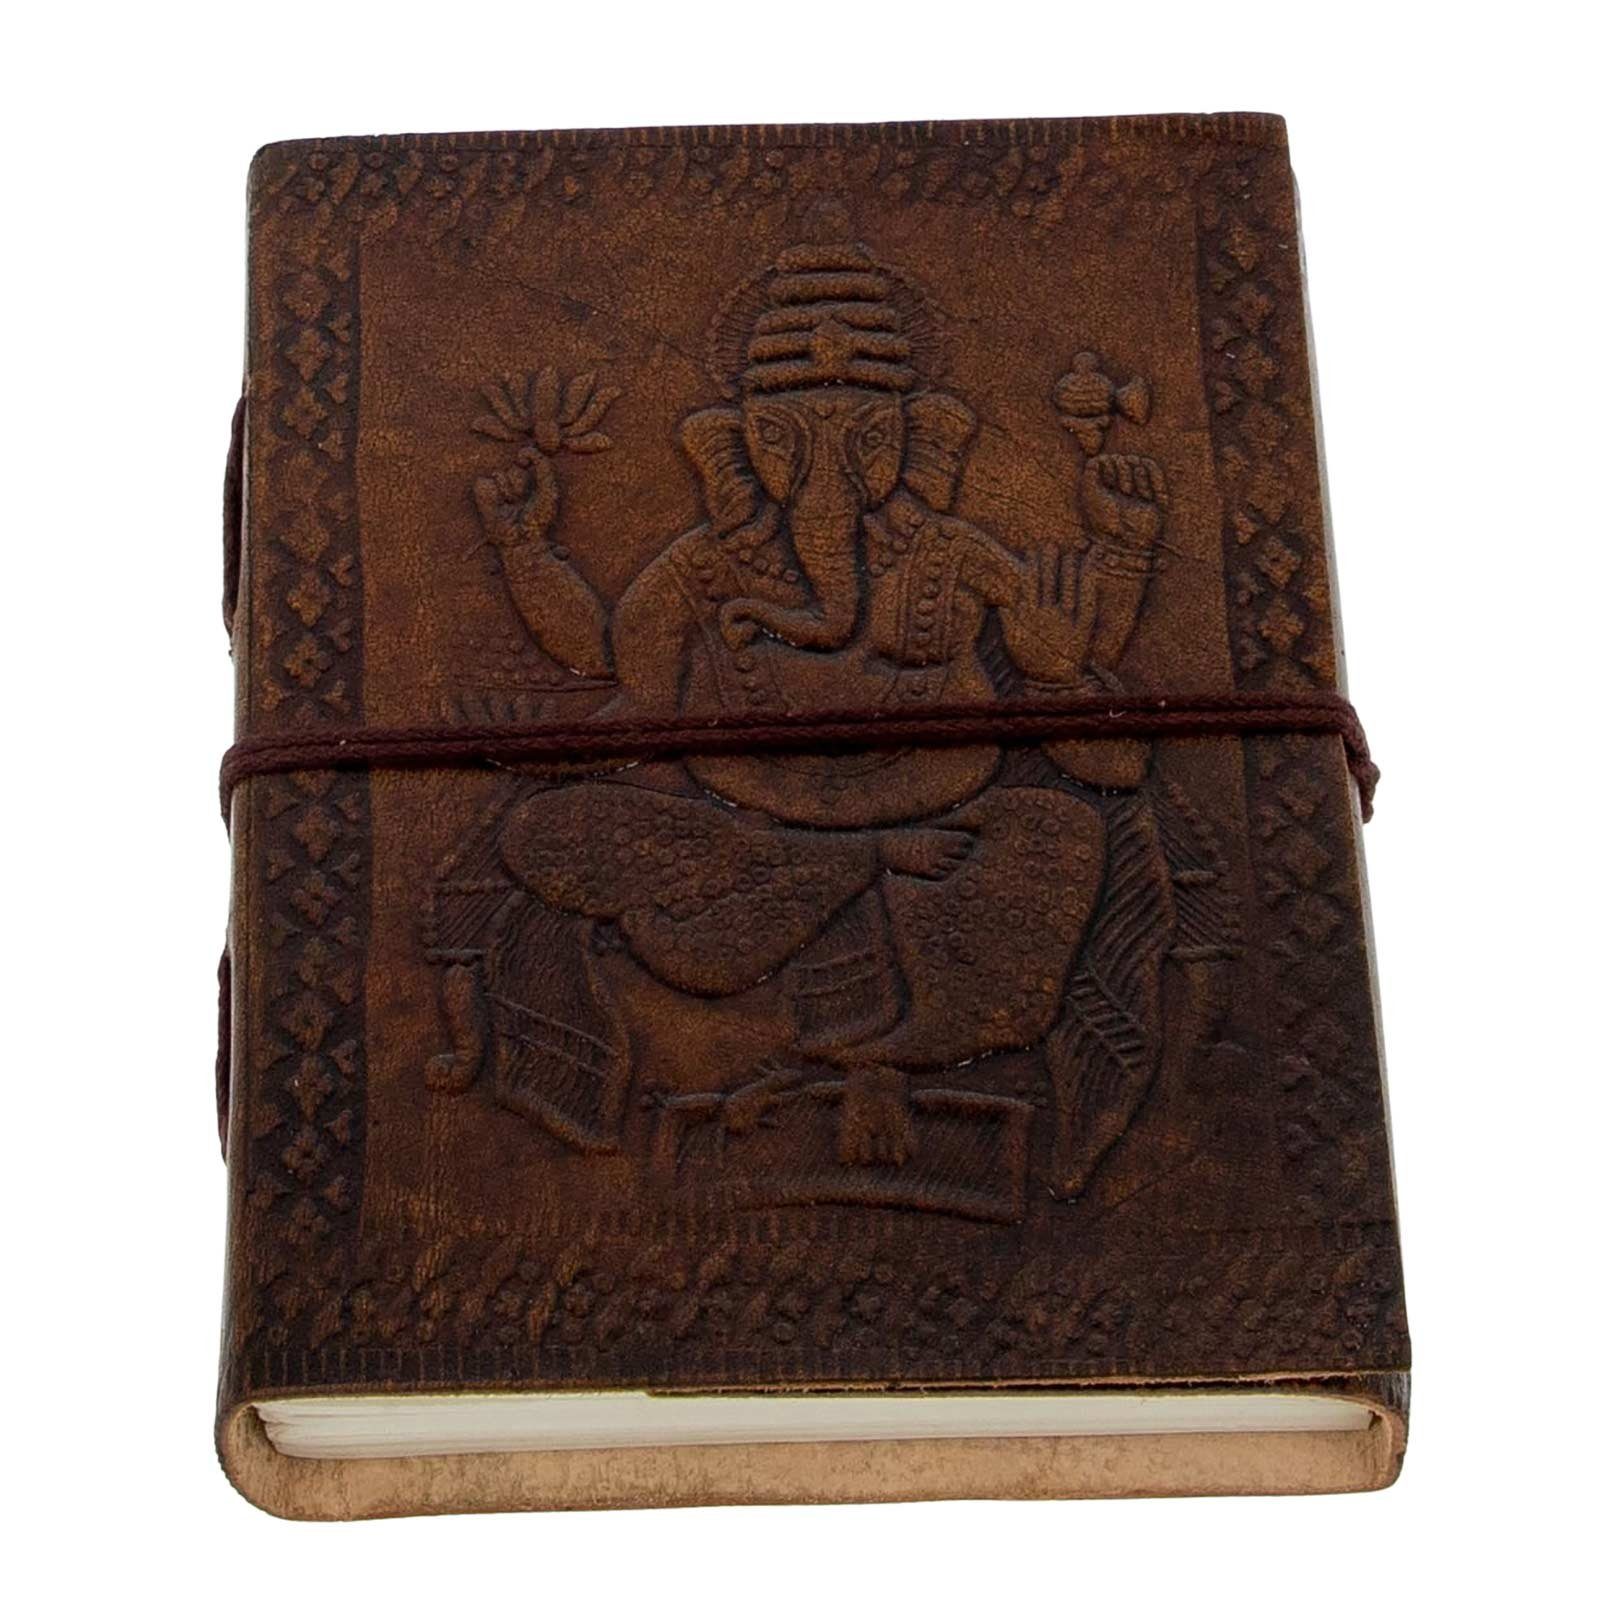 Lord Ganesha handgefertigt Leder Tagebuch KUNST UND 11,5x15cm Tagebuch Notizbuch MAGIE